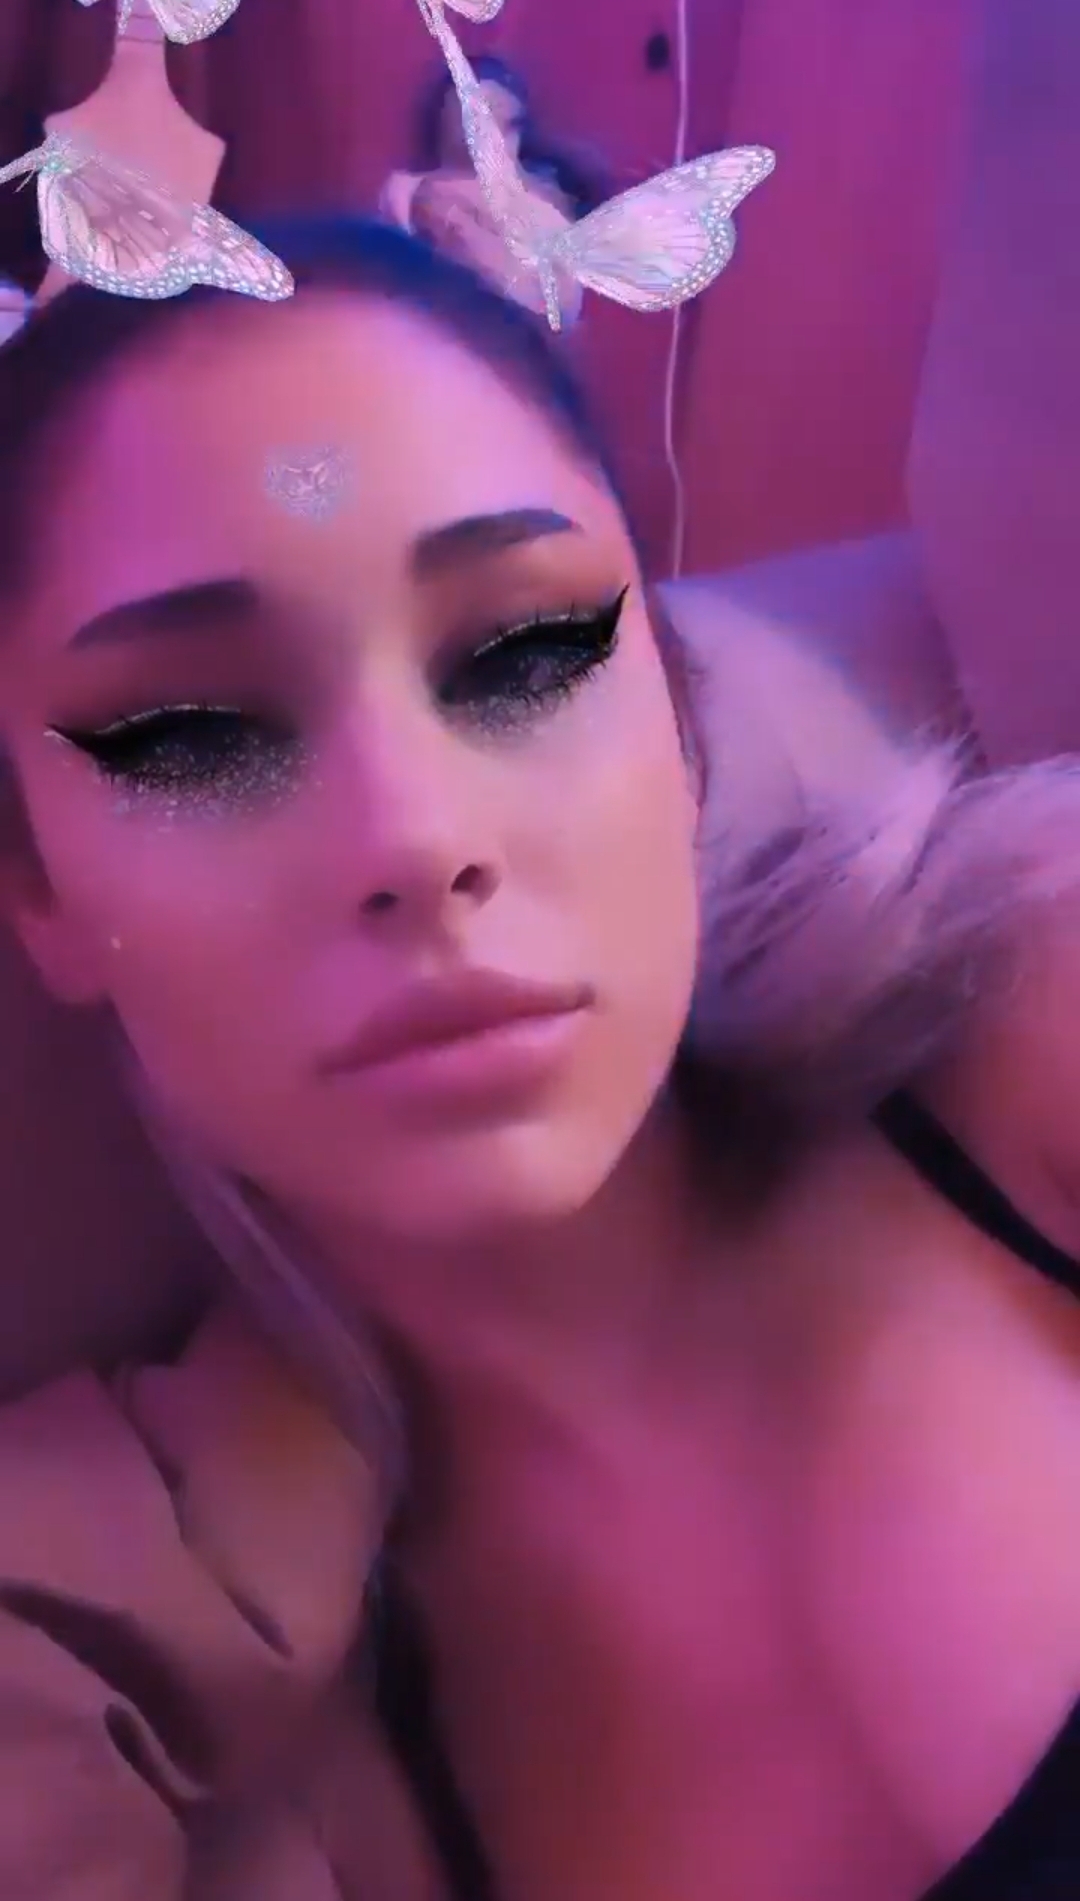 Ariana Grande â€“ Instagram and social media